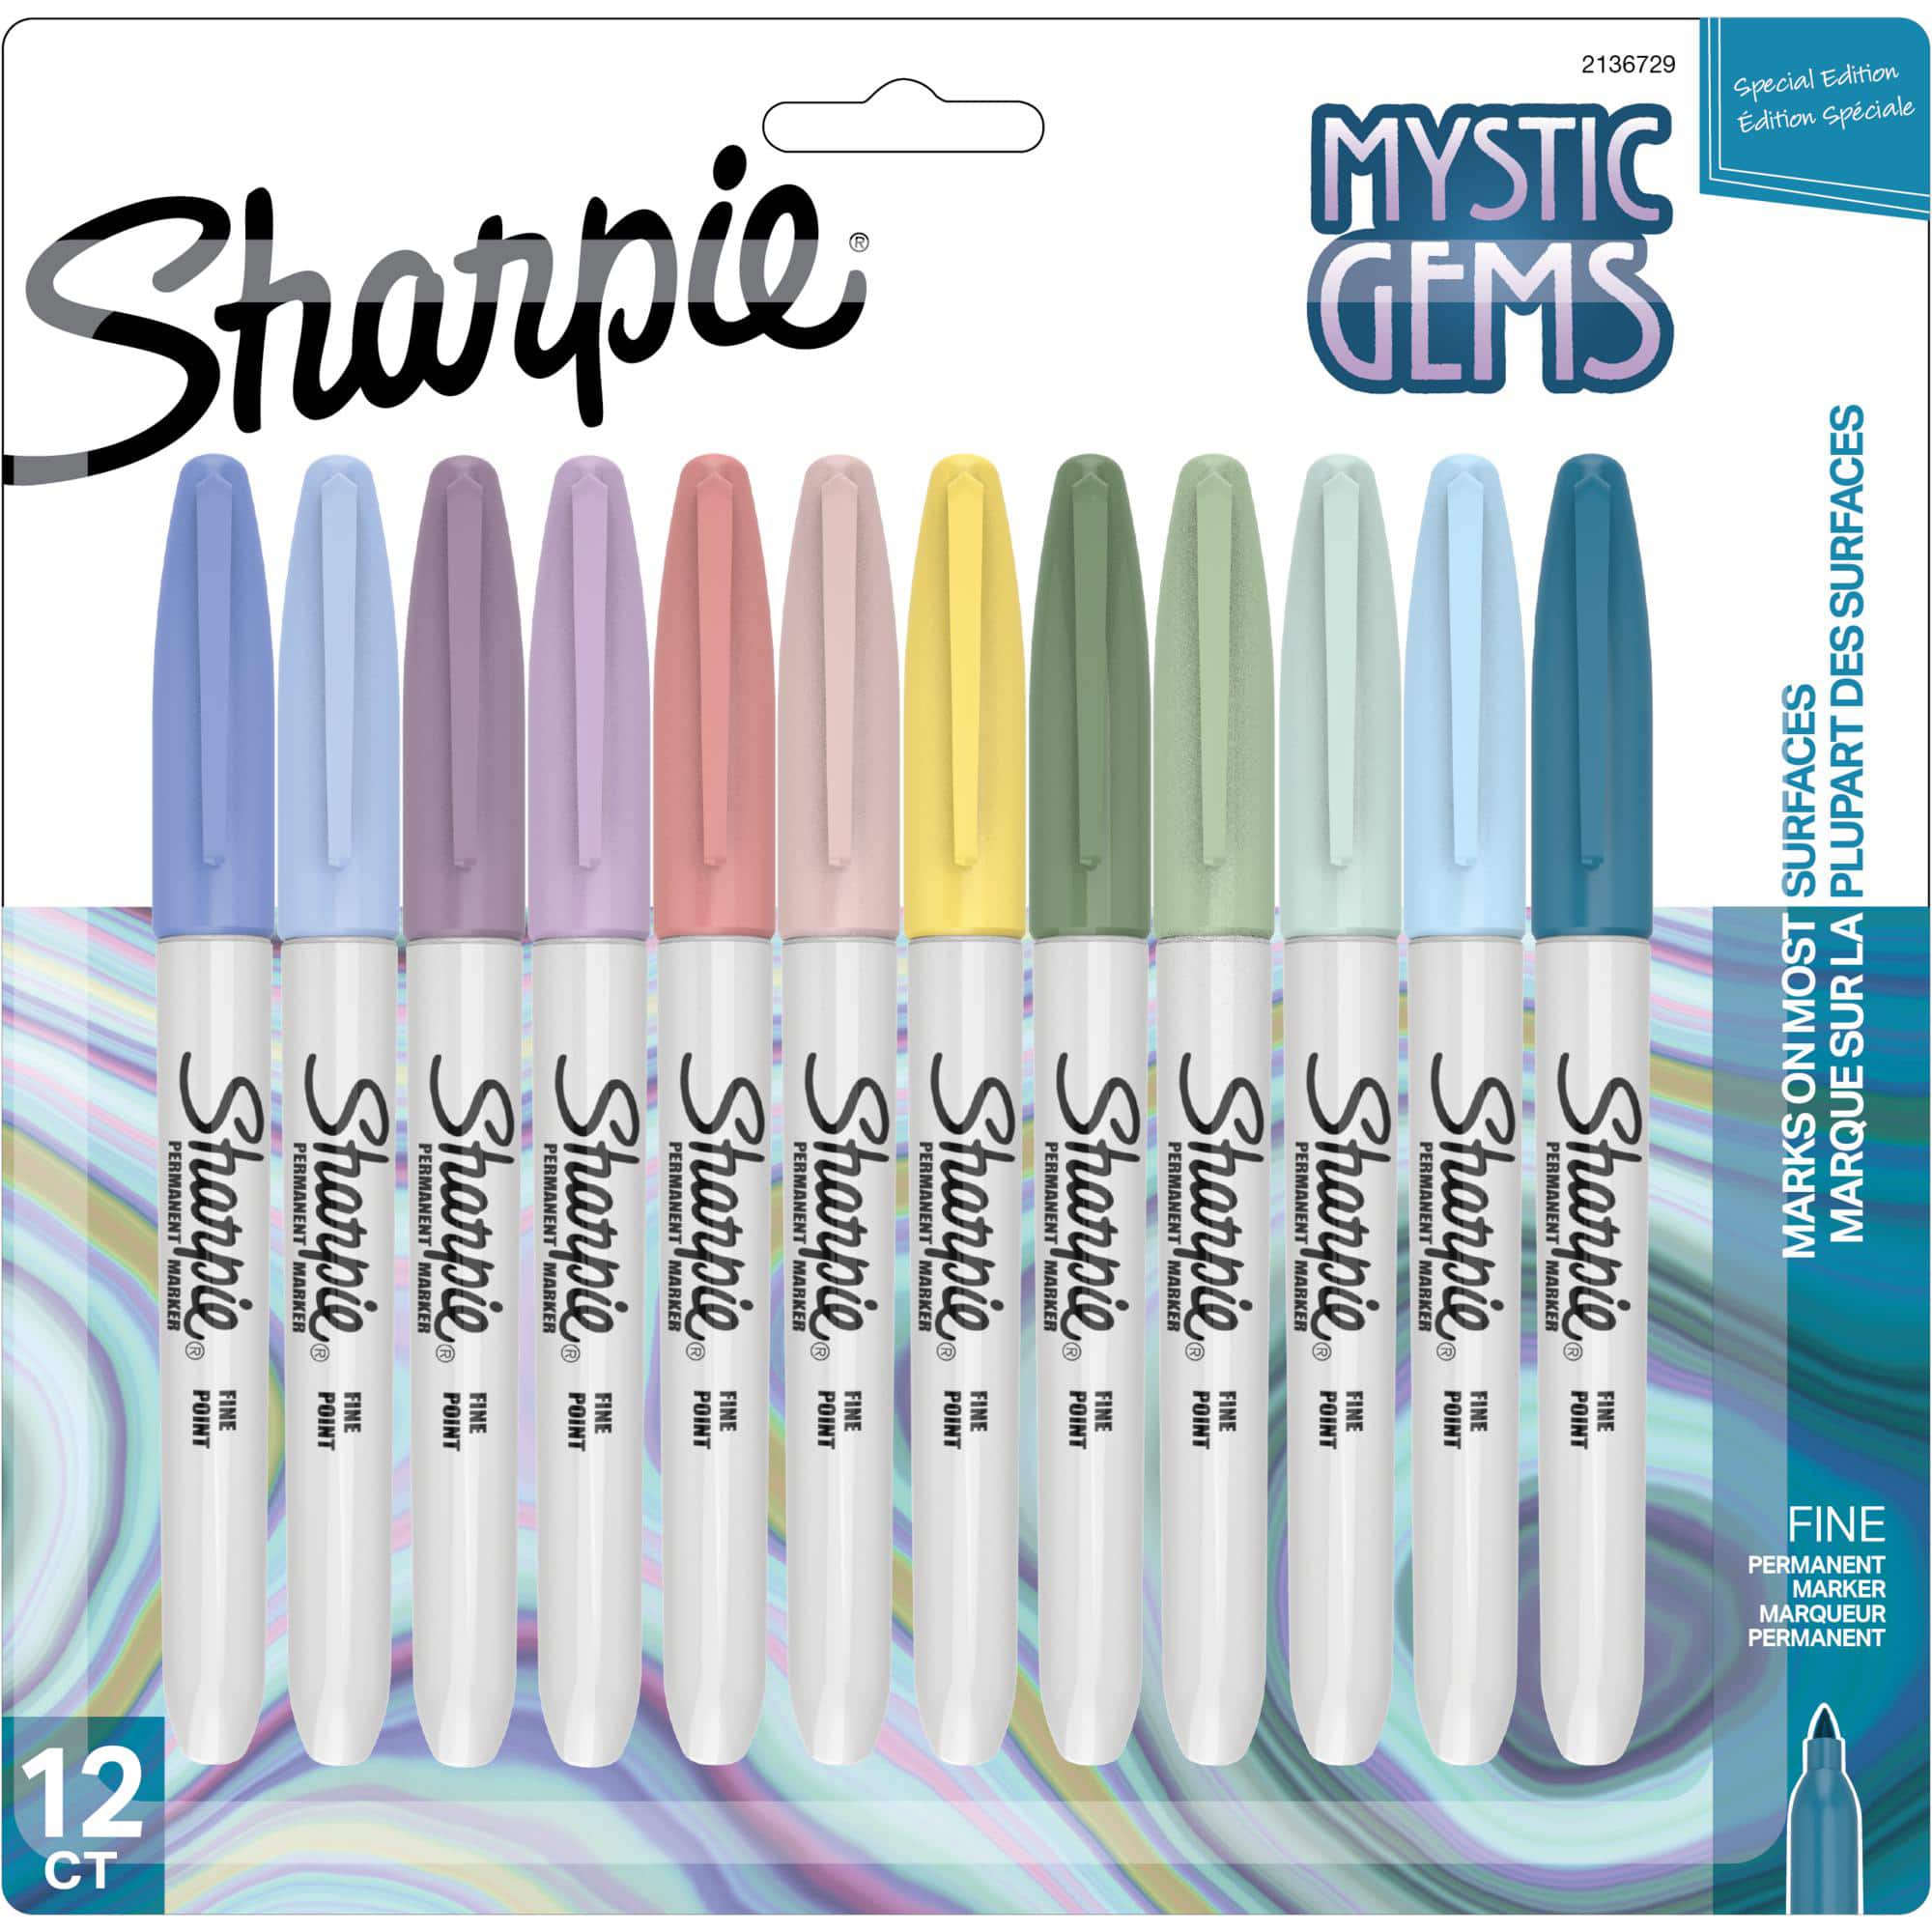 Pack de 12 marcadores permanentes Sharpie fine mystic gems nuevos colores ·  Sharpie · El Corte Inglés